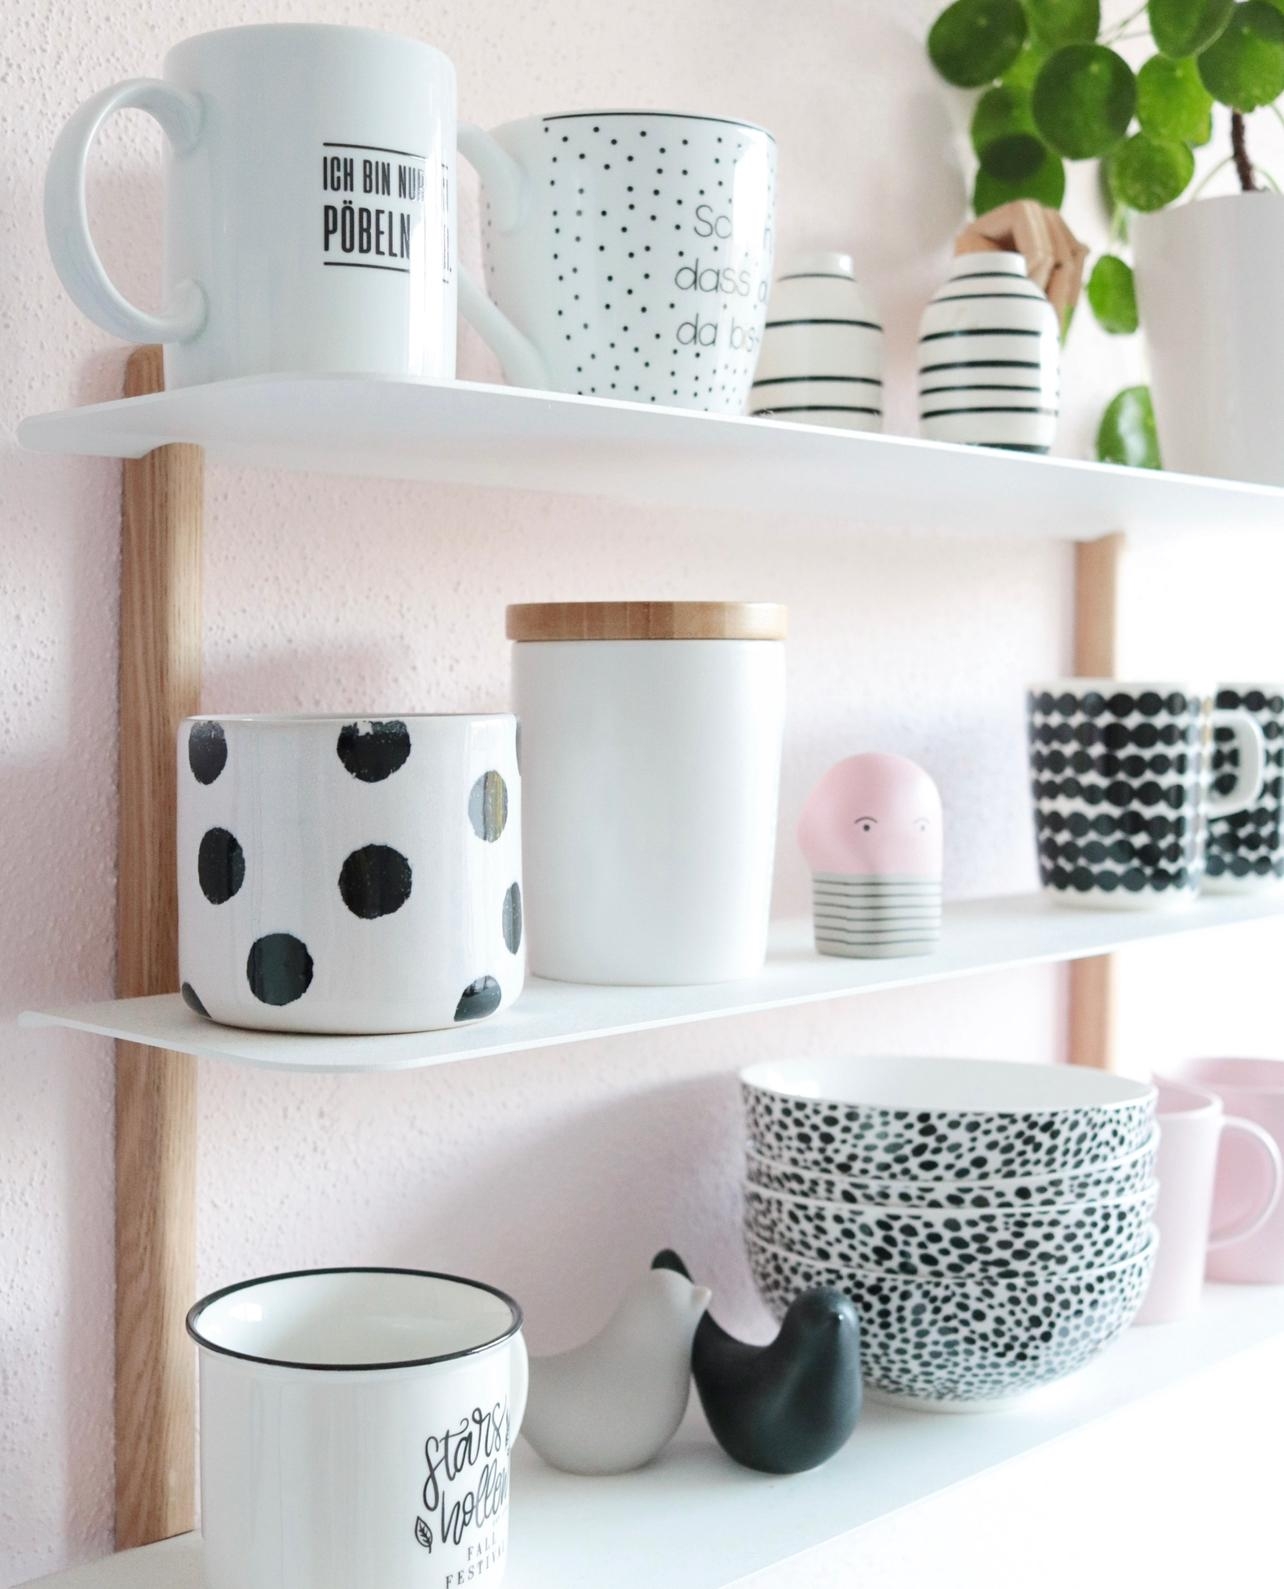 It‘s all about the details 🤍
#shelf #tassenliebe #shelfie #wandregal #mugs #pilea #küche #skandi #scandinavianhome